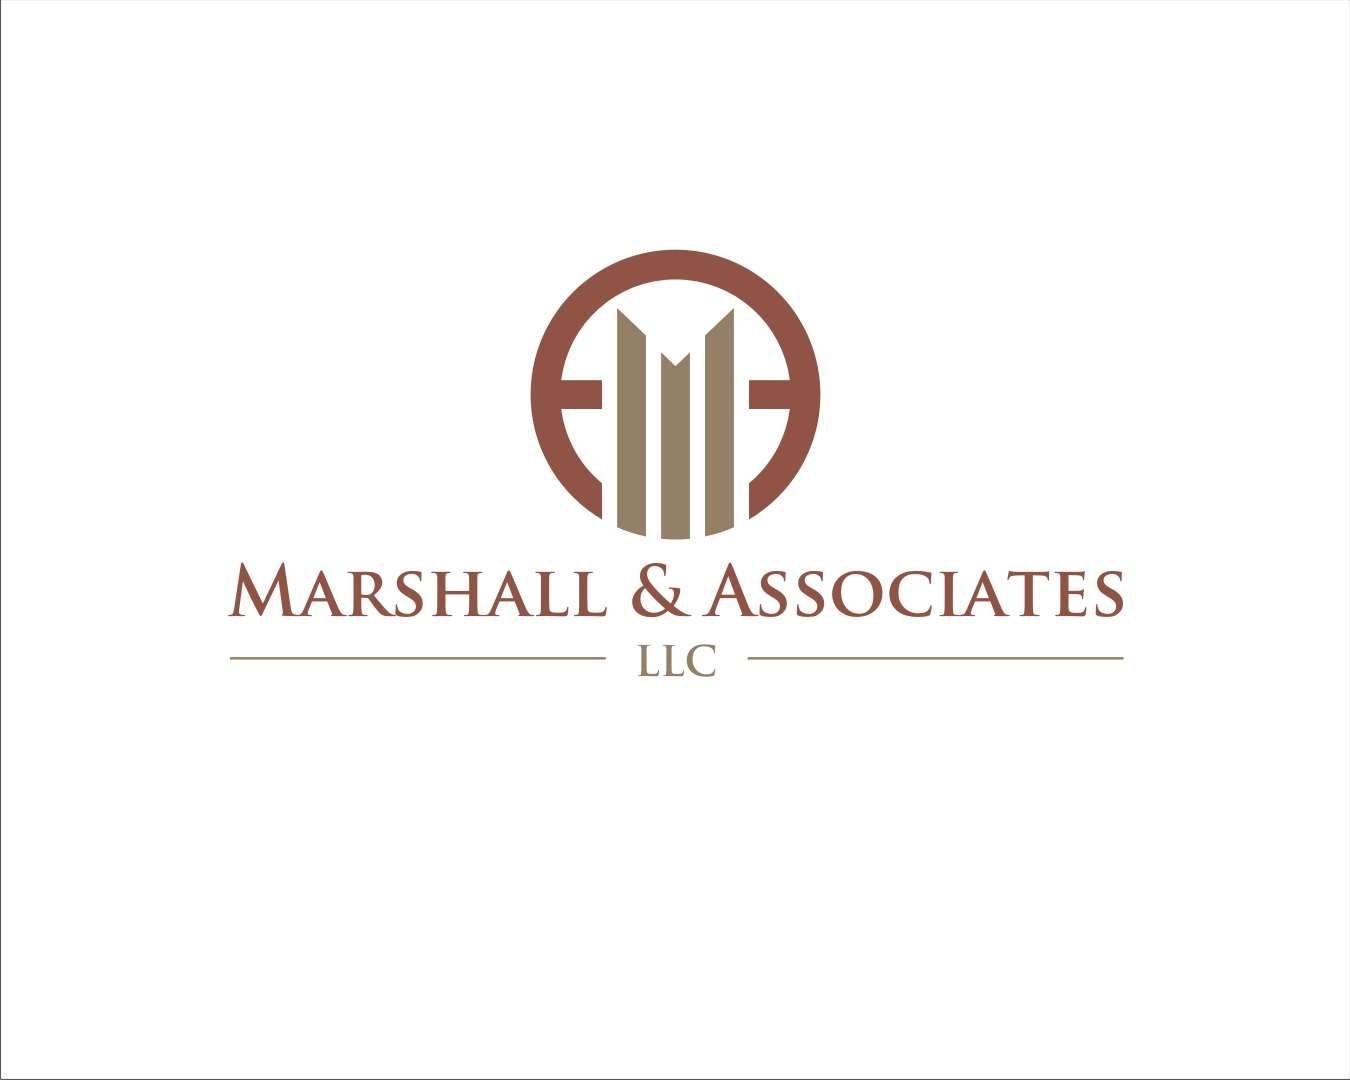 Logo Design entry 1240189 submitted by warnawarni to the Logo Design for Marshall & Associates LLC - www.marshall-team.com run by John Marshall